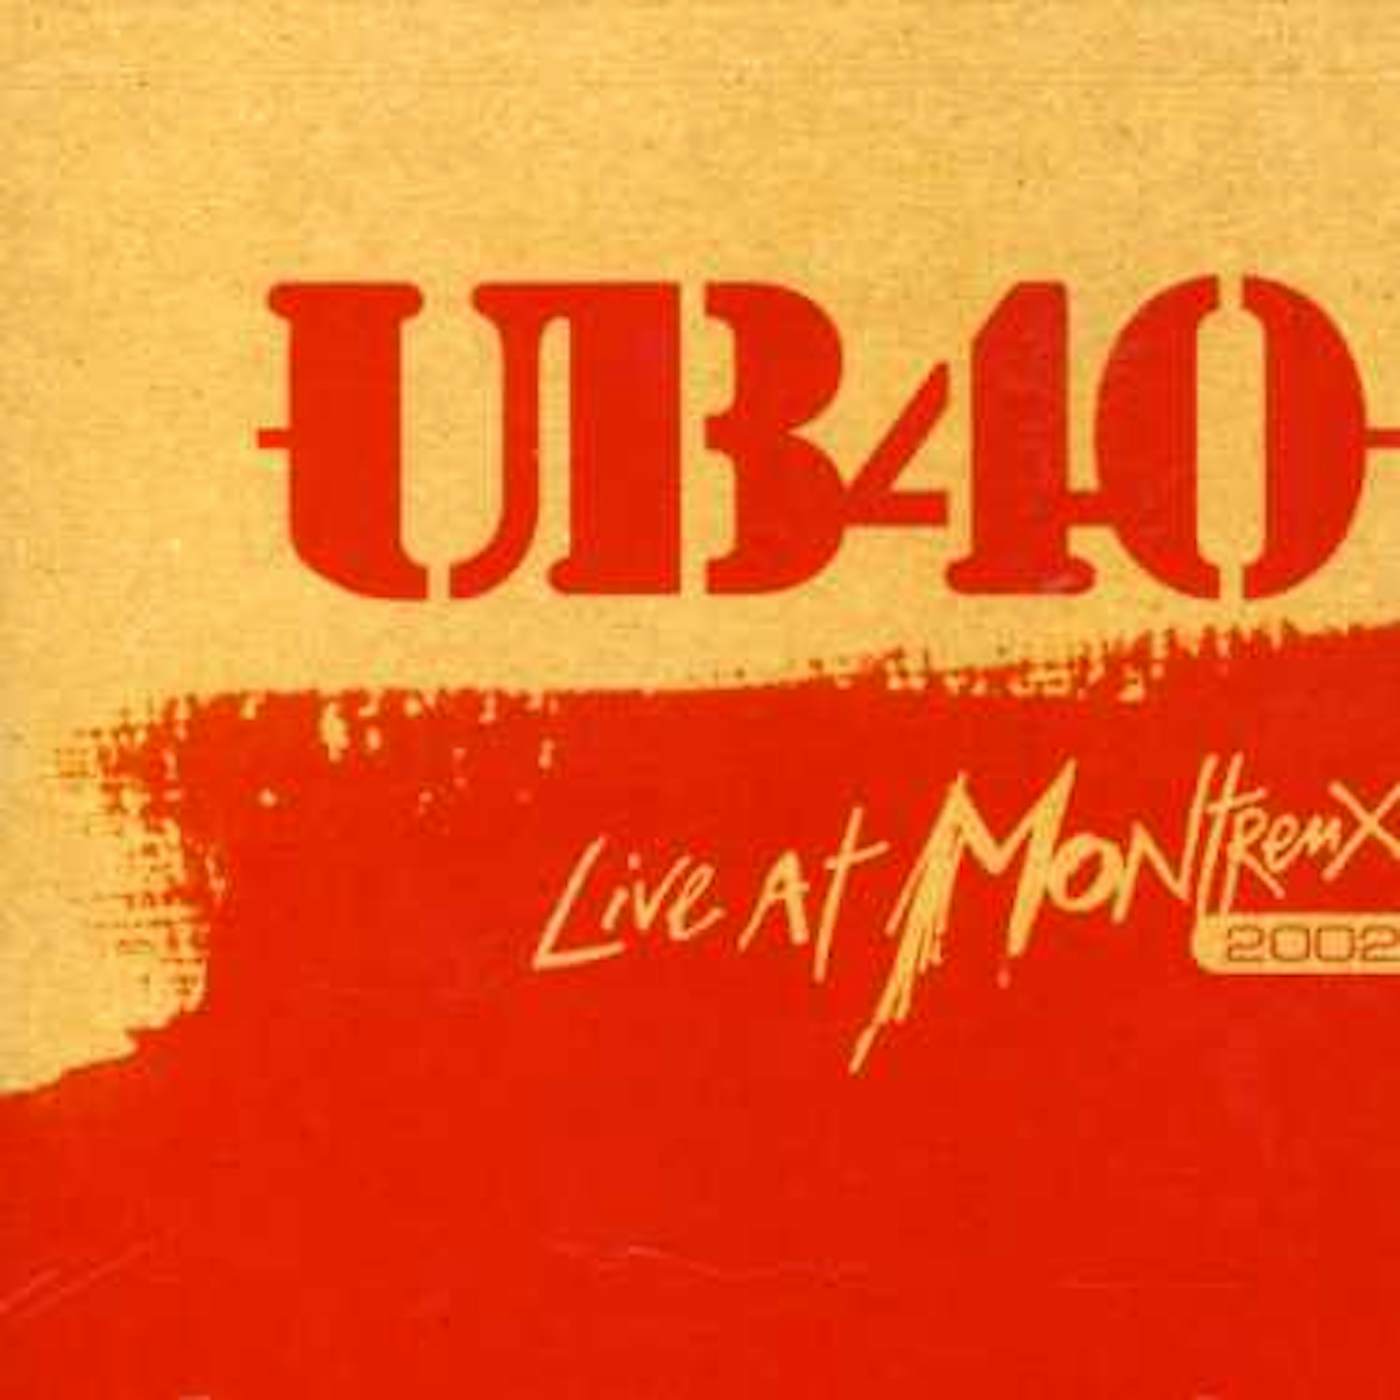 UB40 LIVE AT MONTREUX 2002 CD